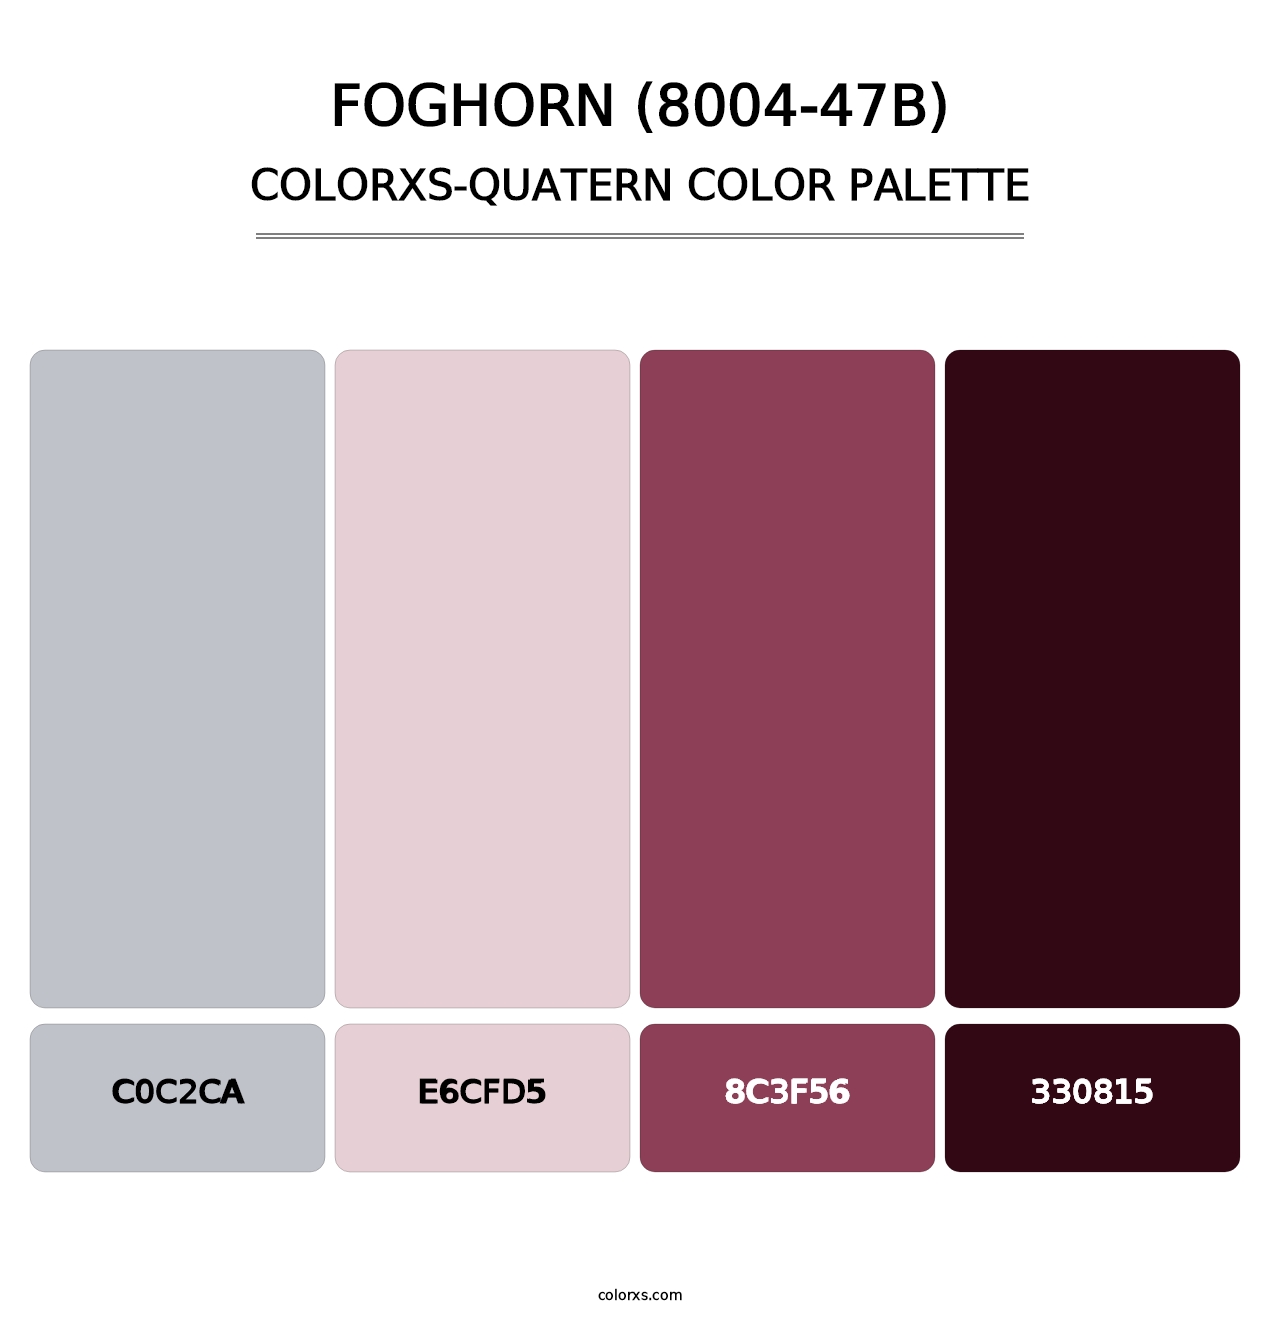 Foghorn (8004-47B) - Colorxs Quatern Palette